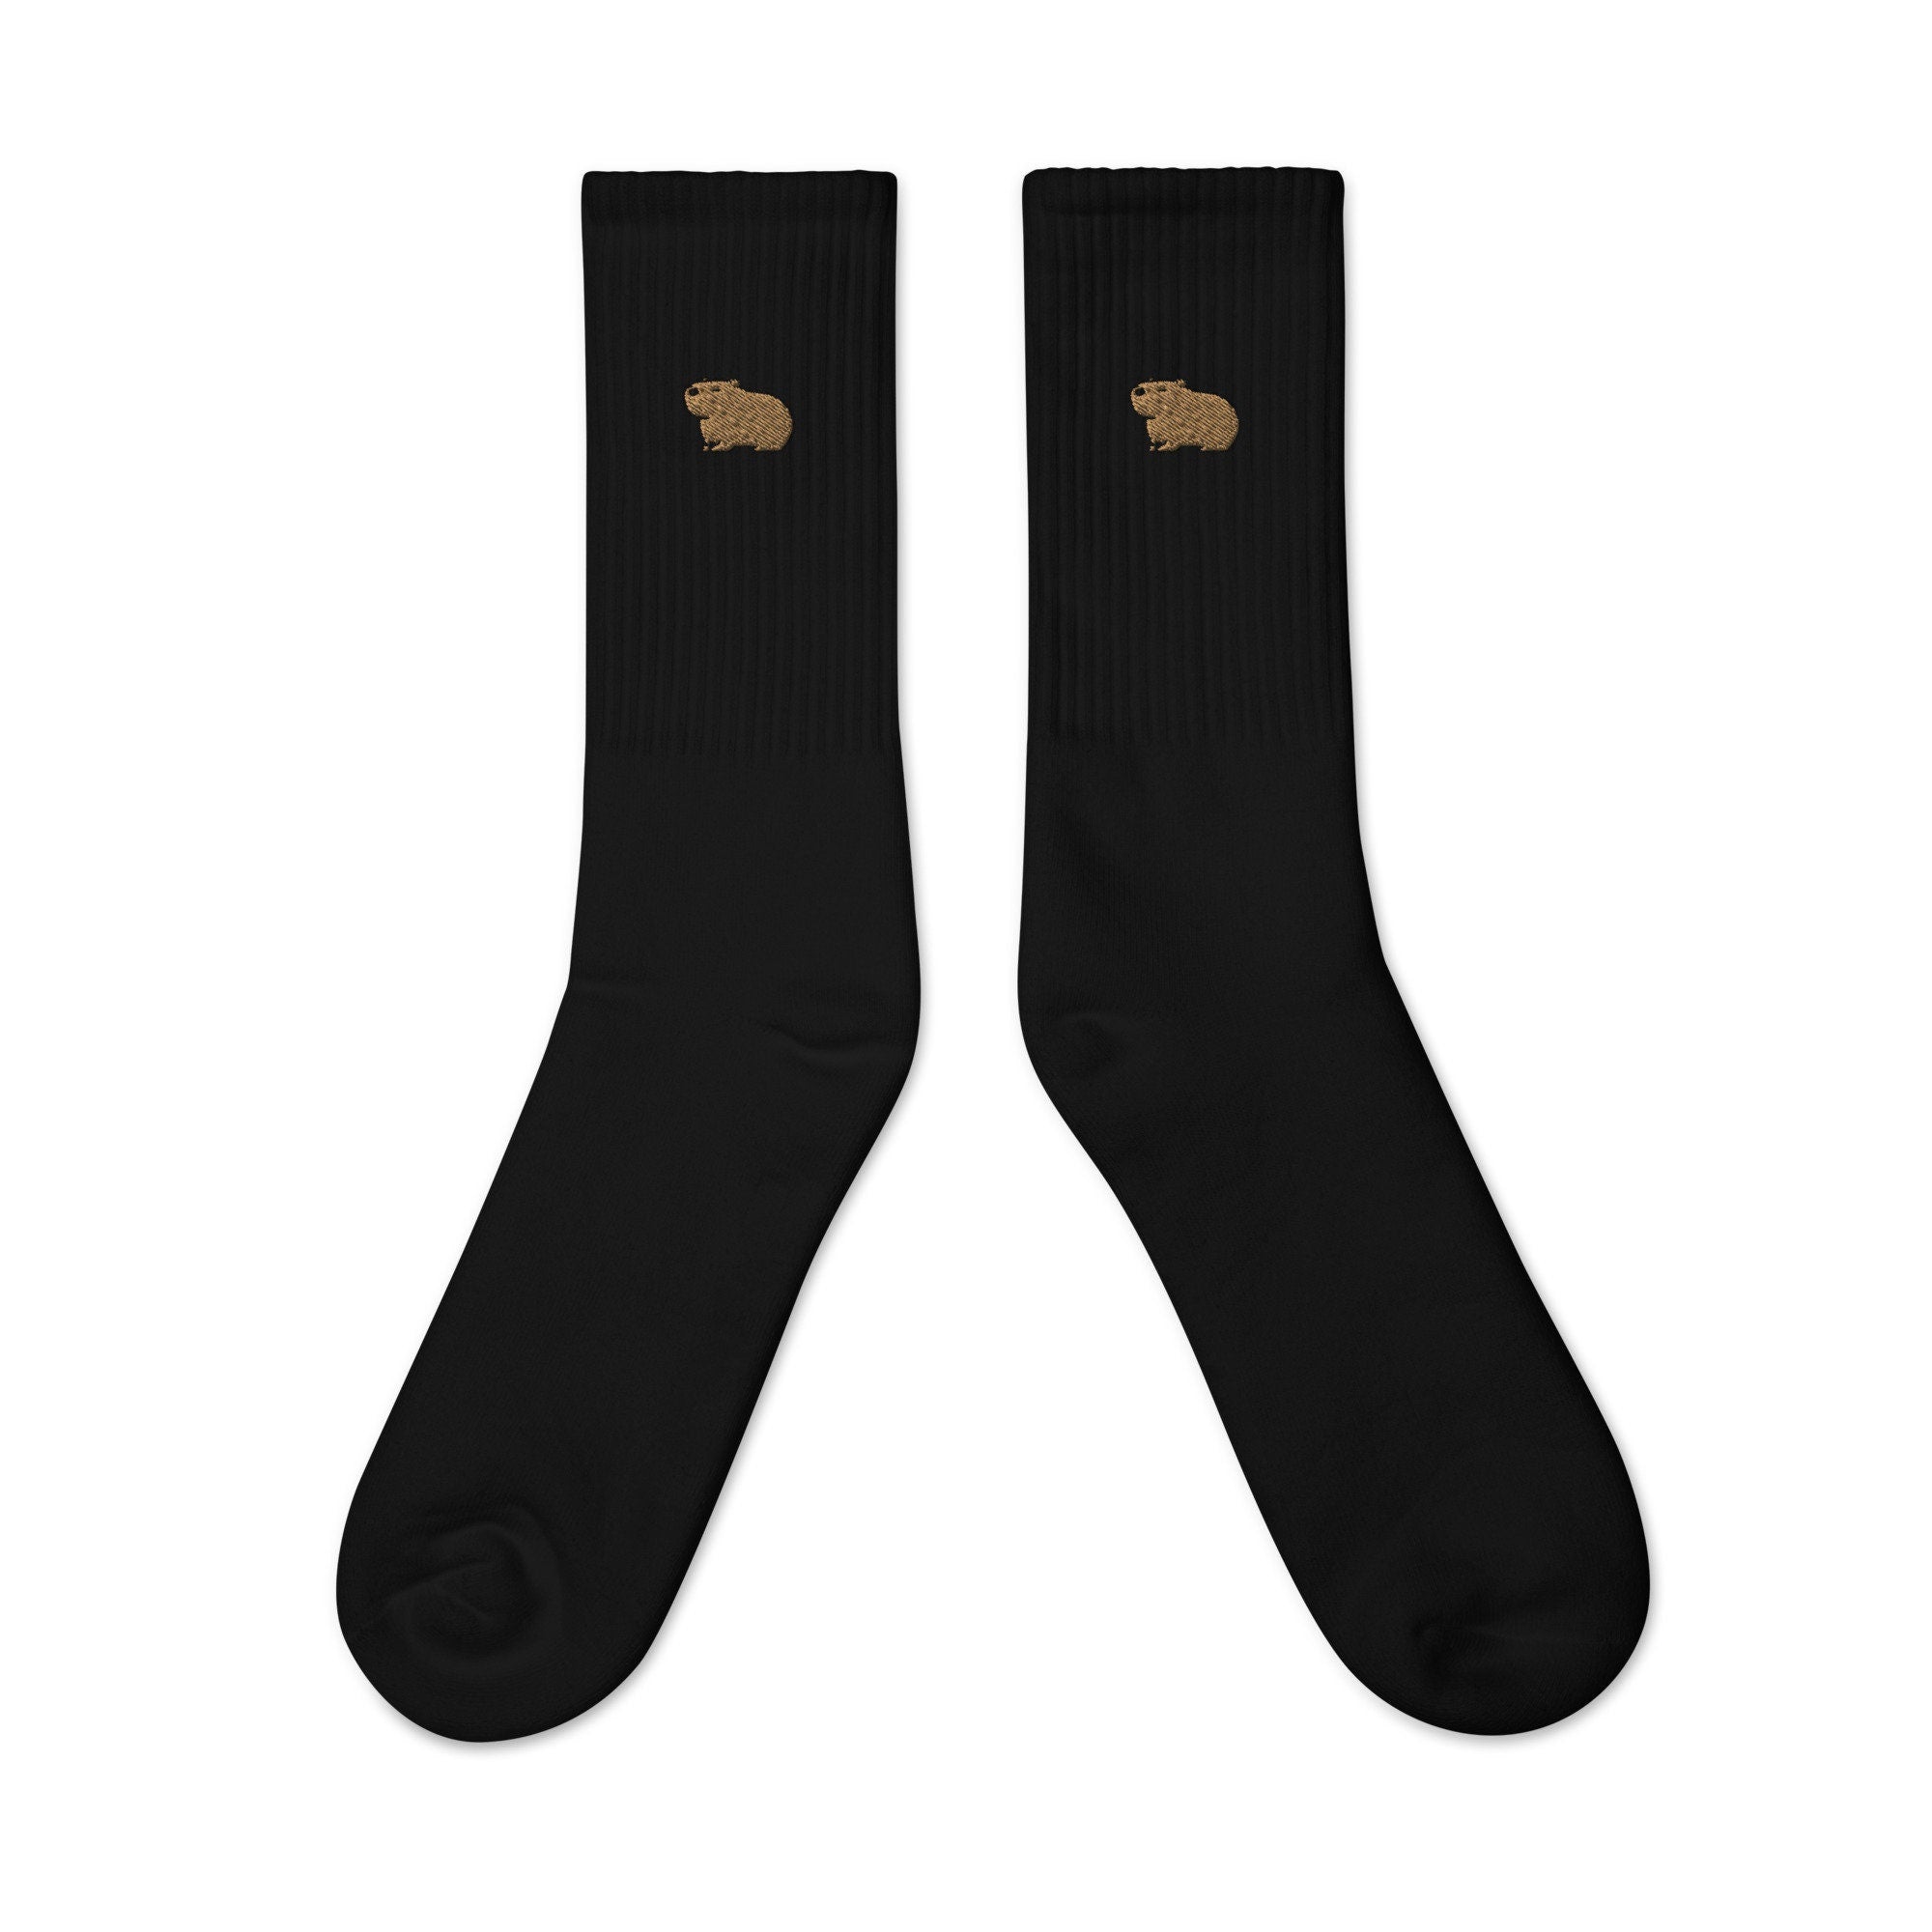 Capybara Embroidered Socks, Premium Embroidered Socks, Long Socks Gift - Multiple Colors